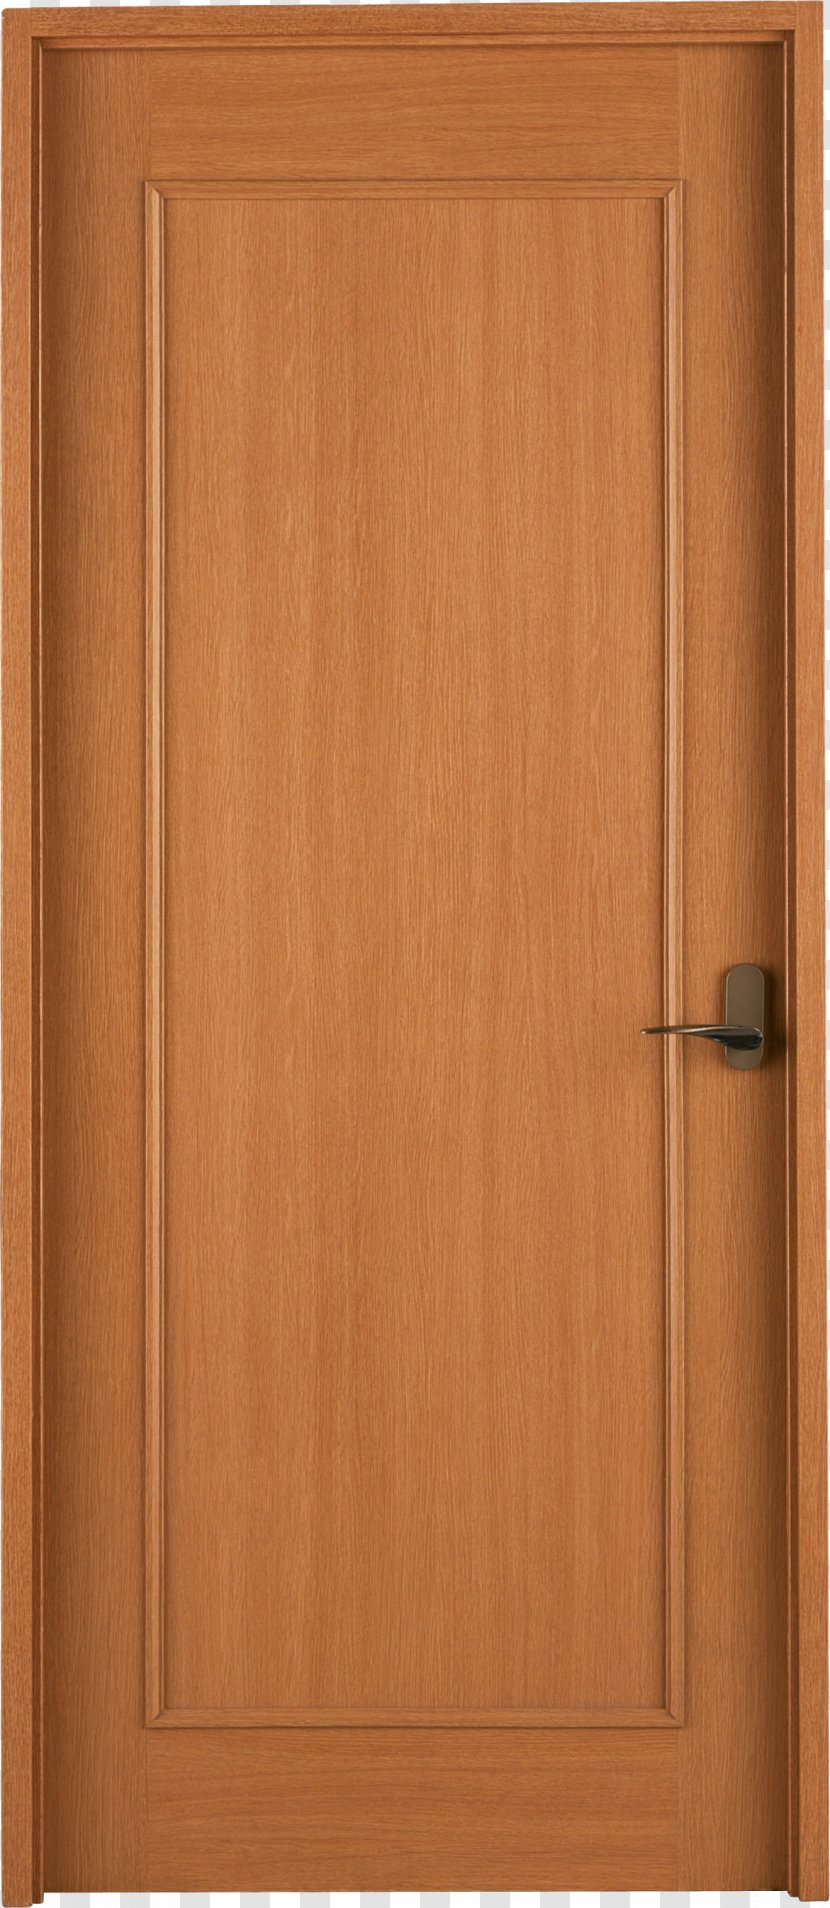 Door Icon - Digital Image Transparent PNG